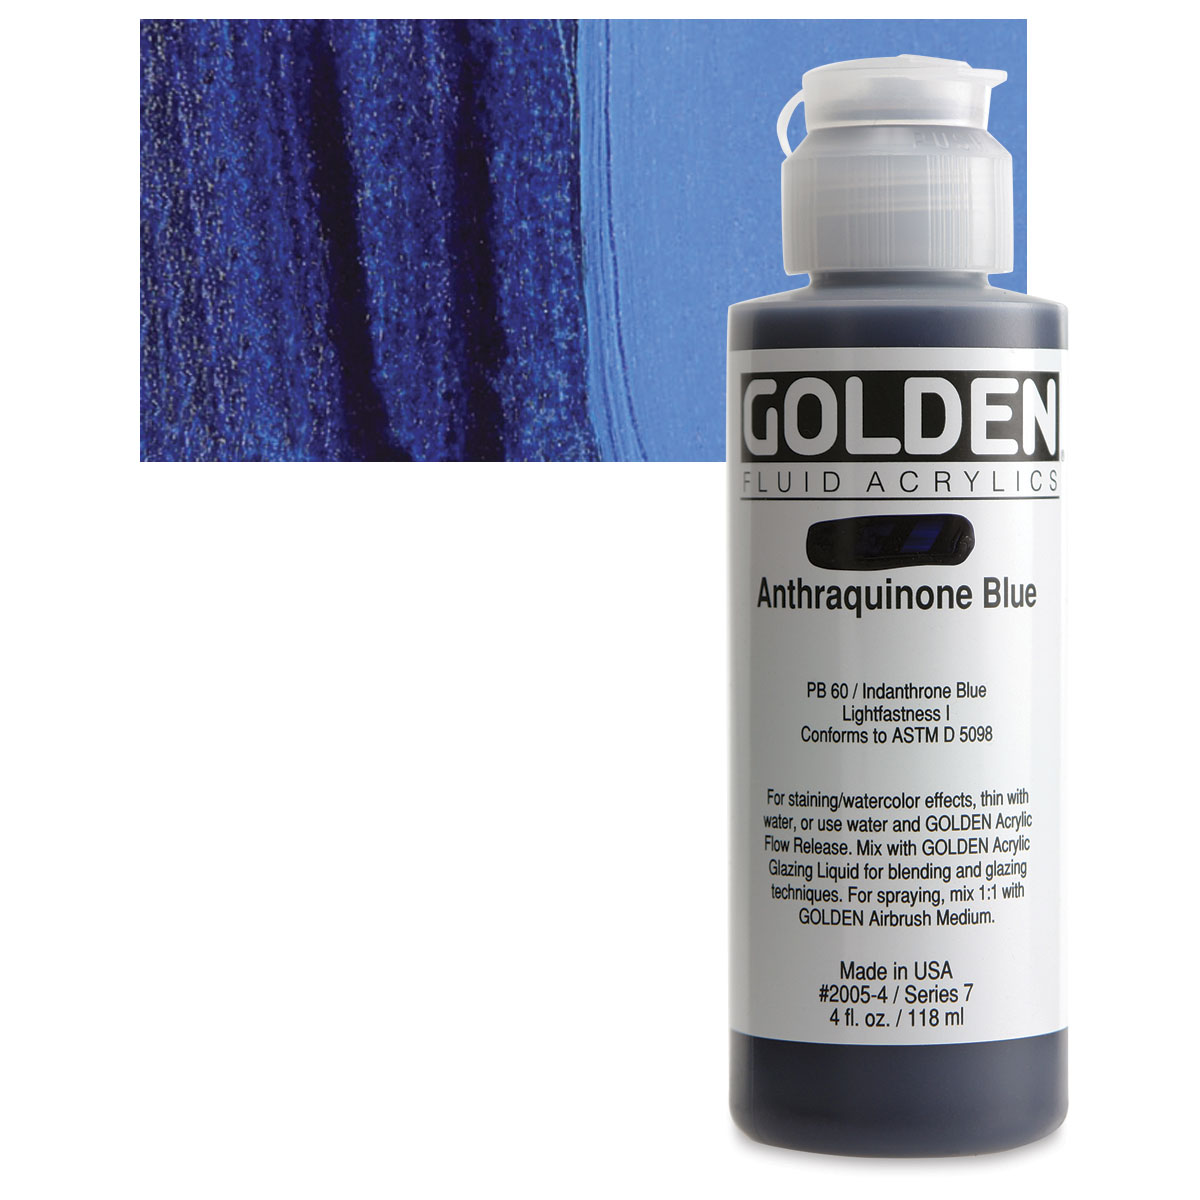 Golden Fluid Acrylic - Titanium White 16 oz.